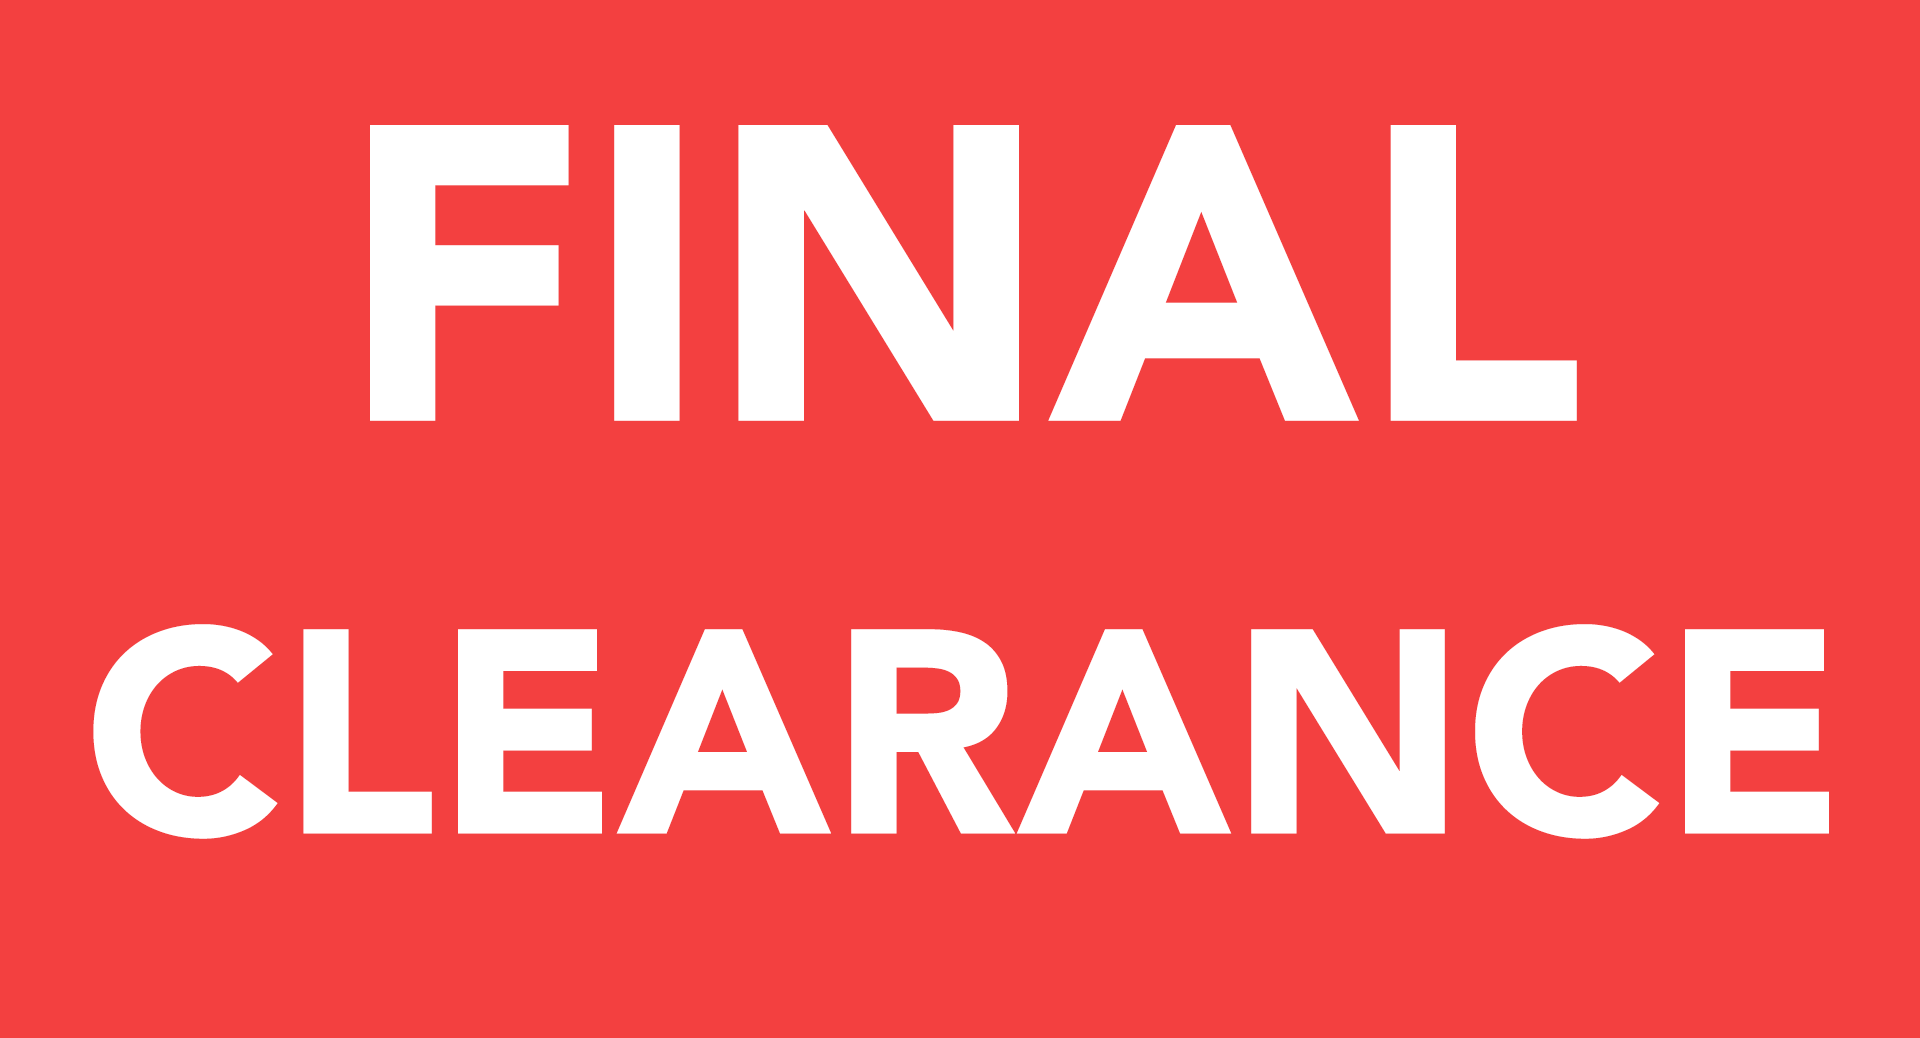 Final Clearance Sale